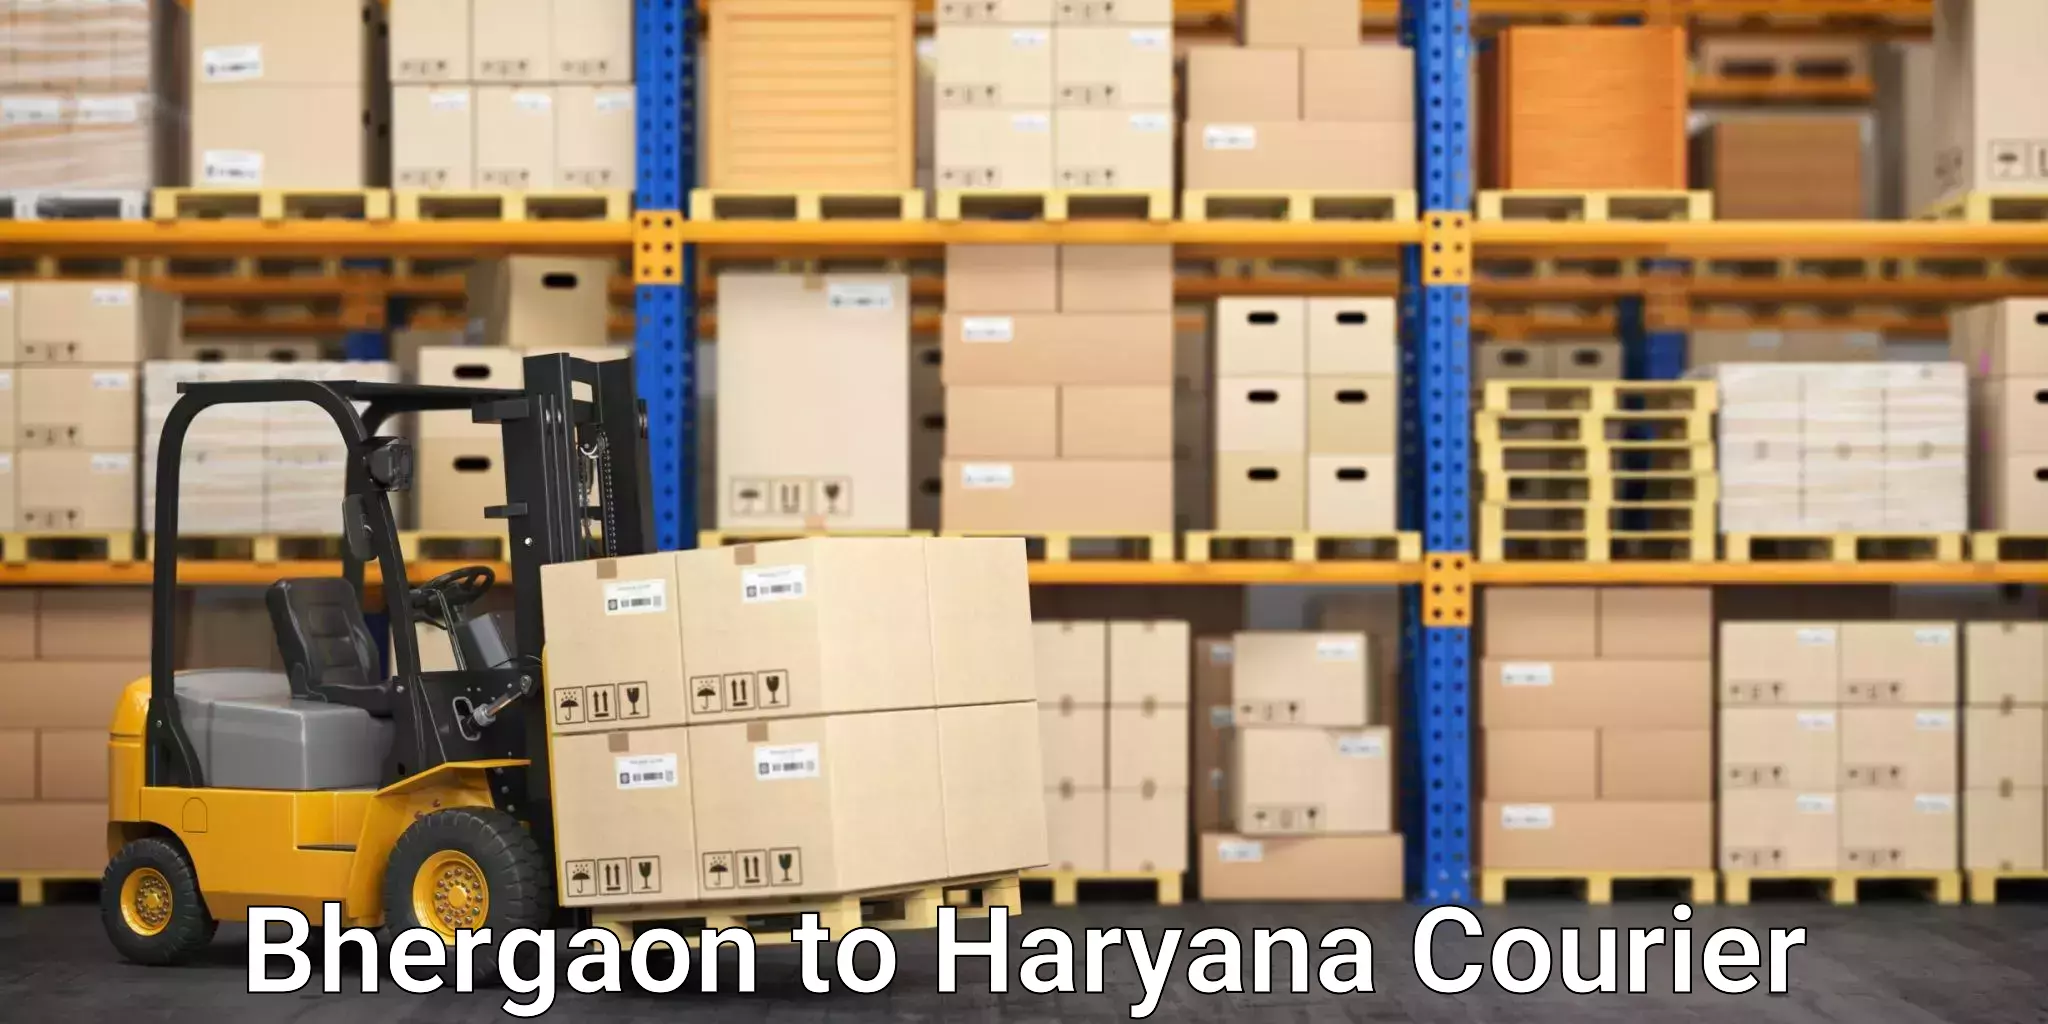 Bulk courier orders Bhergaon to Bilaspur Haryana